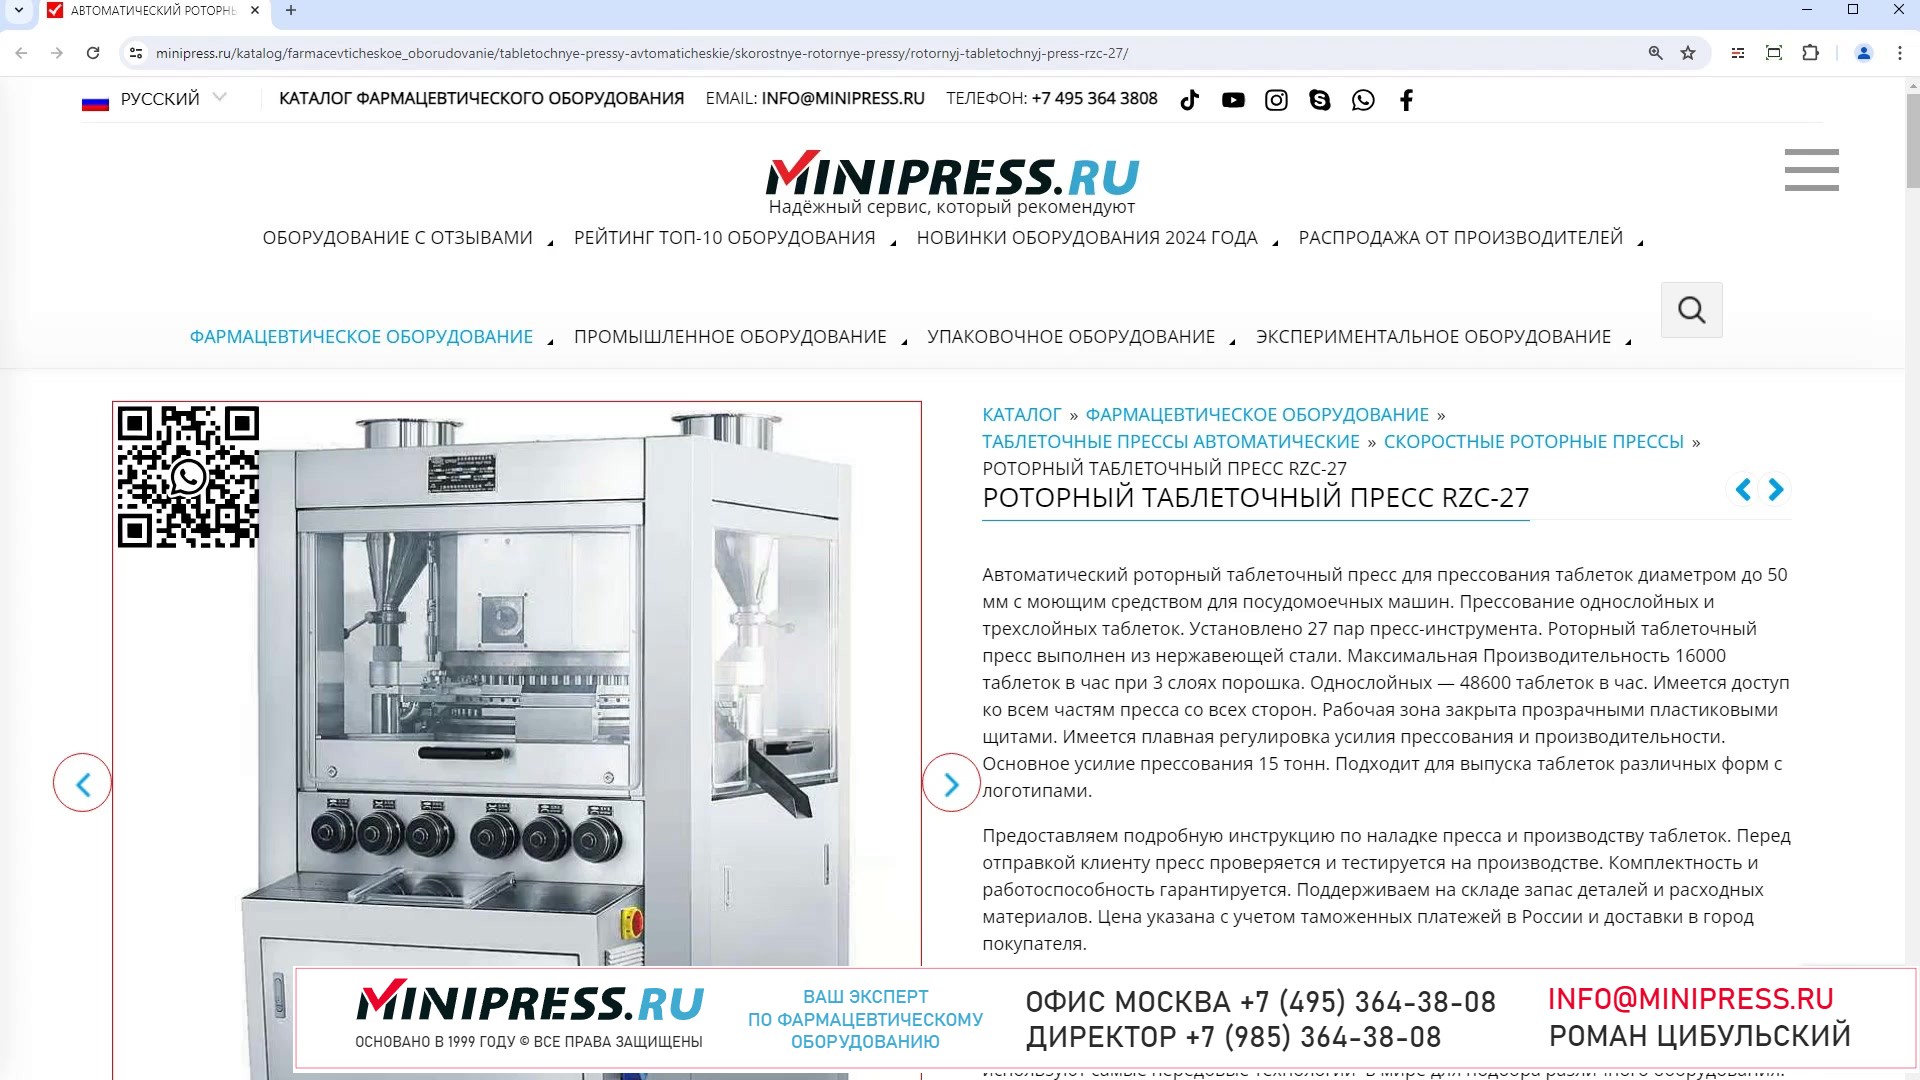 Minipress.ru Роторный таблеточный пресс RZC-27